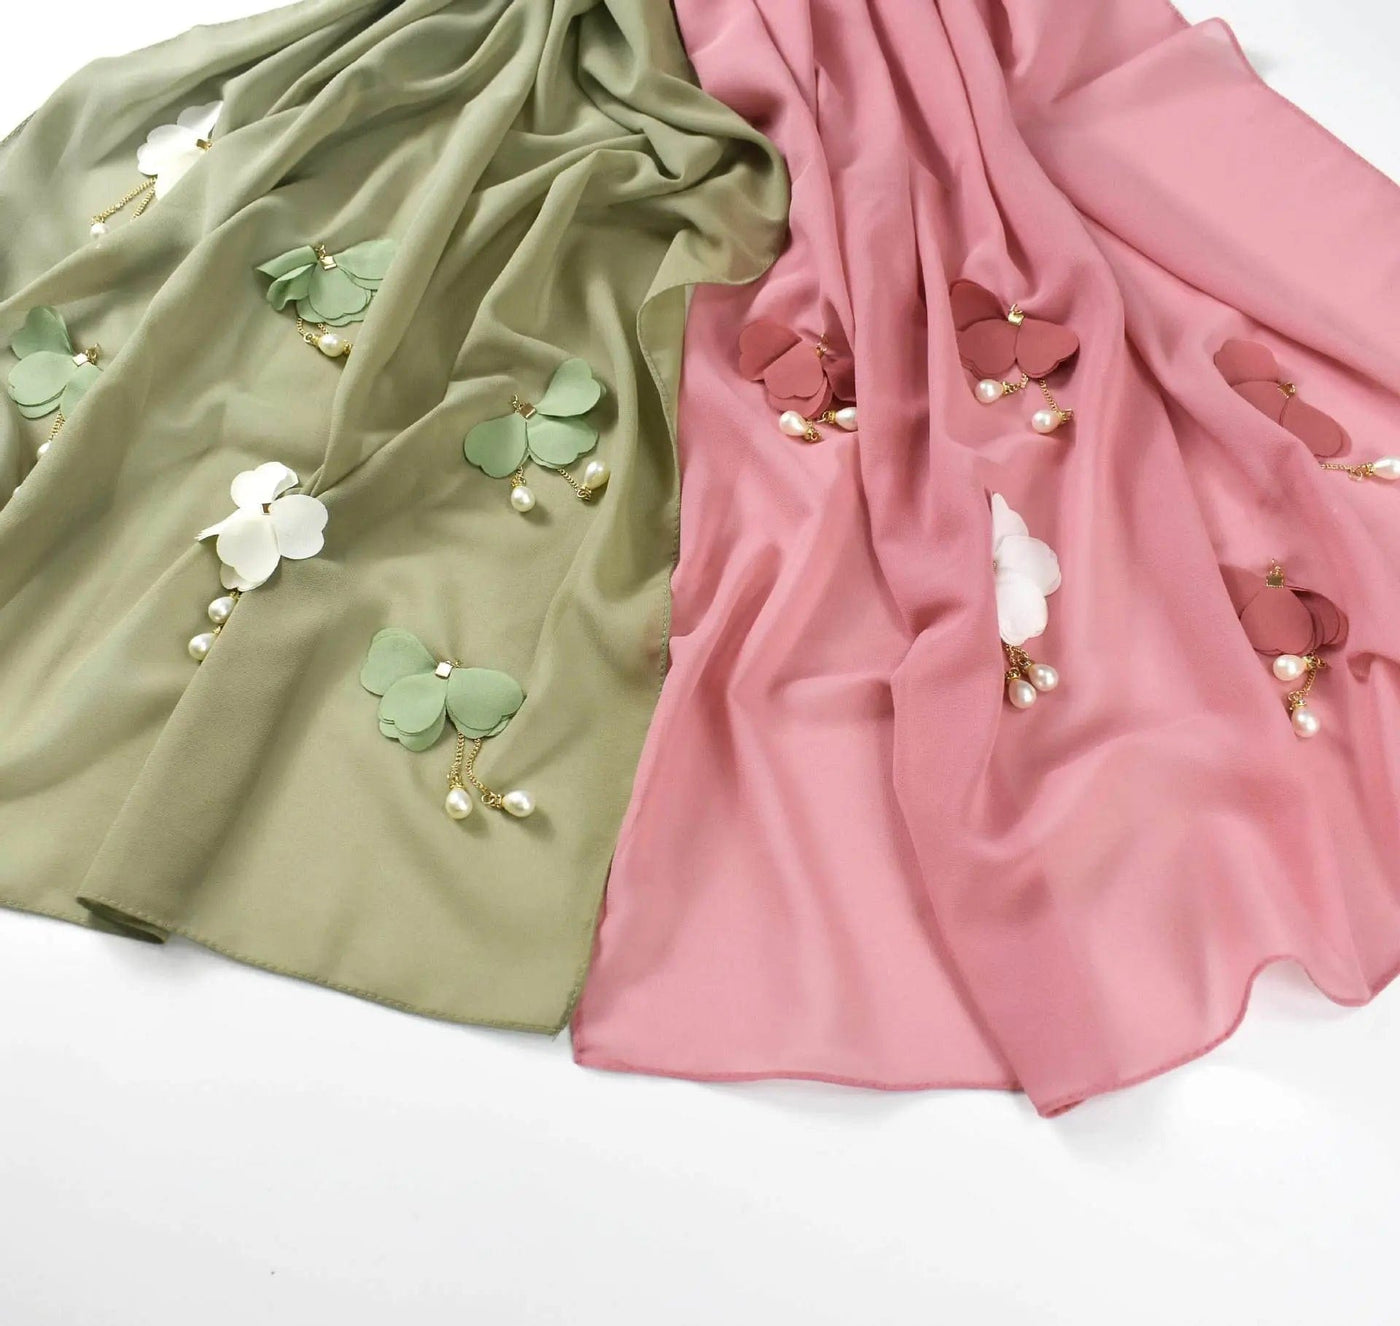 BROOCHITON Scarf Buckles Pearl Chiffon Hijab scarf pink and green